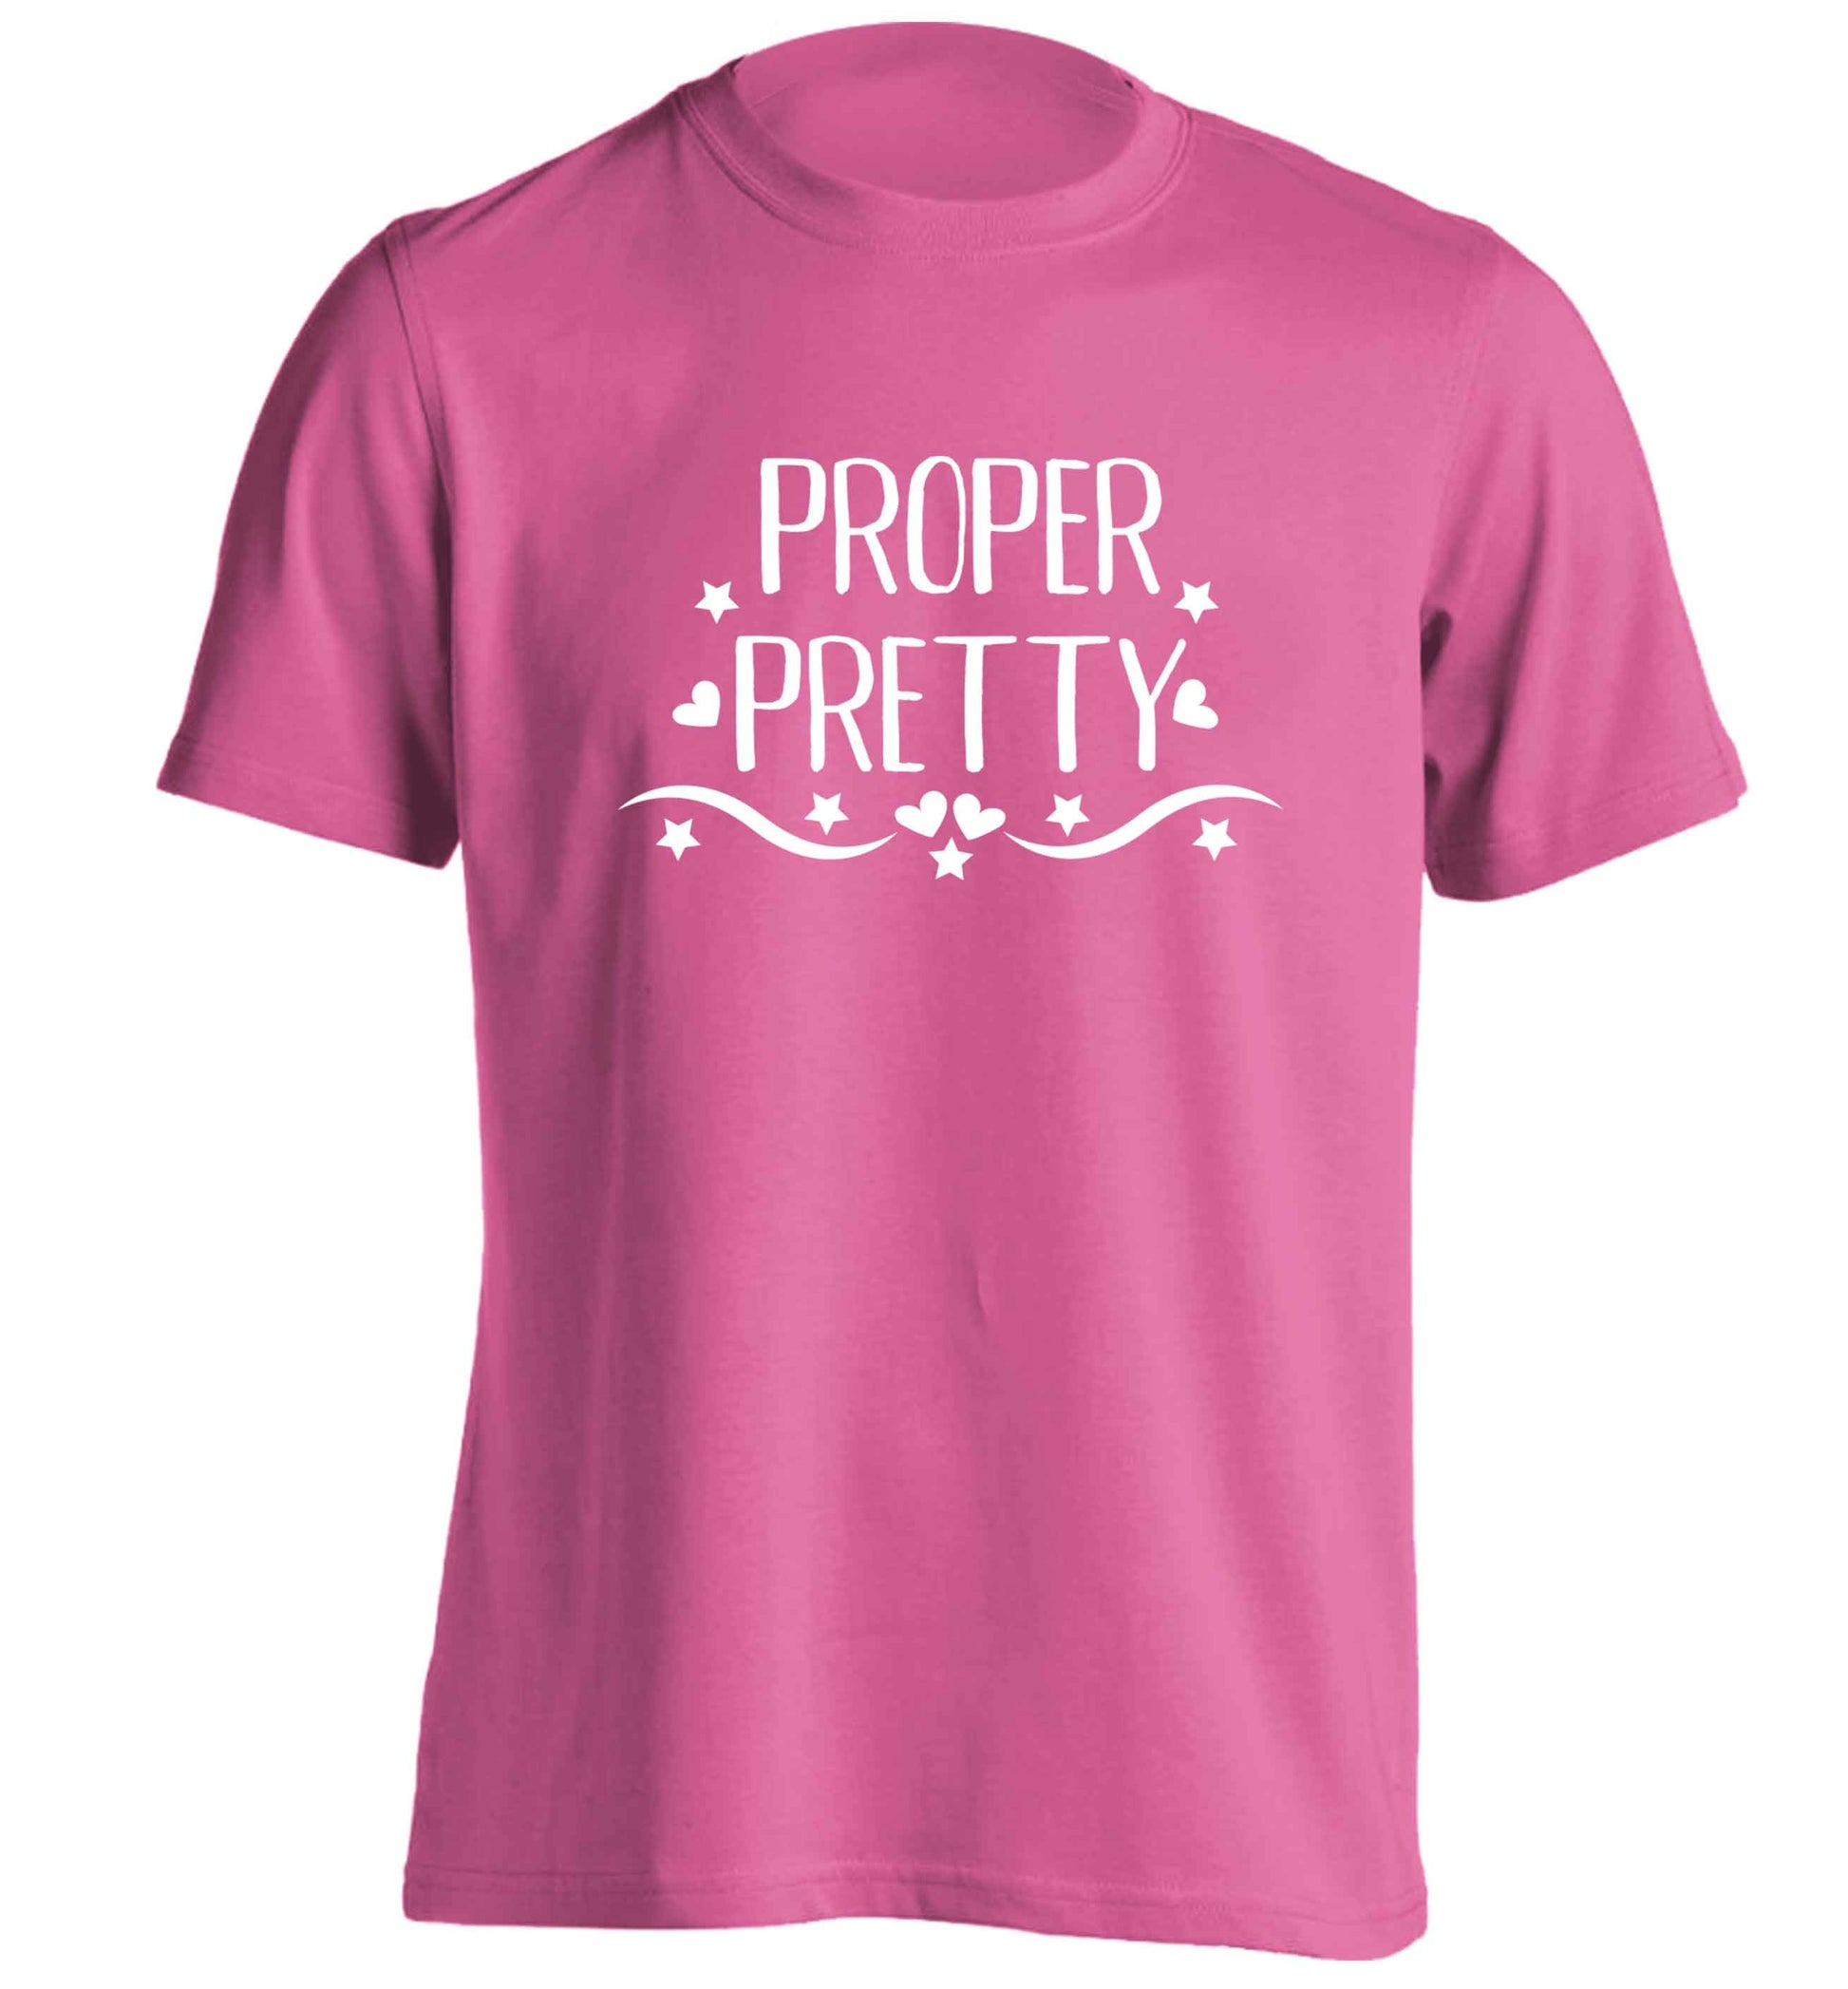 Proper pretty adults unisex pink Tshirt 2XL